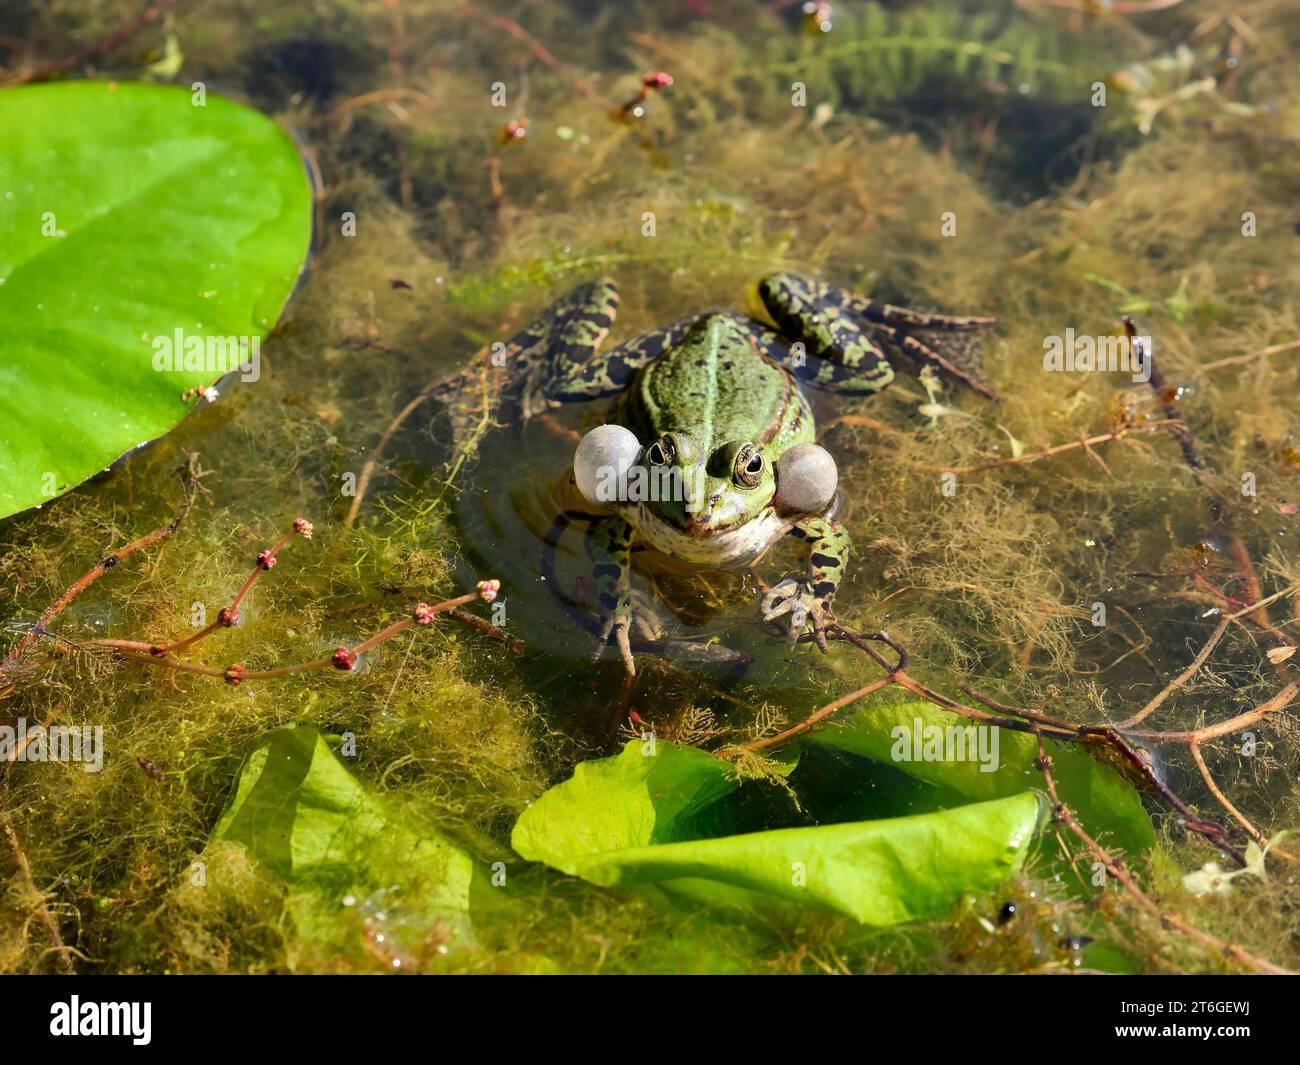 European green frog (edible frog, Rana esculenta or Pelophylax esculentus) croaking and swimming in a pond Stock Photo